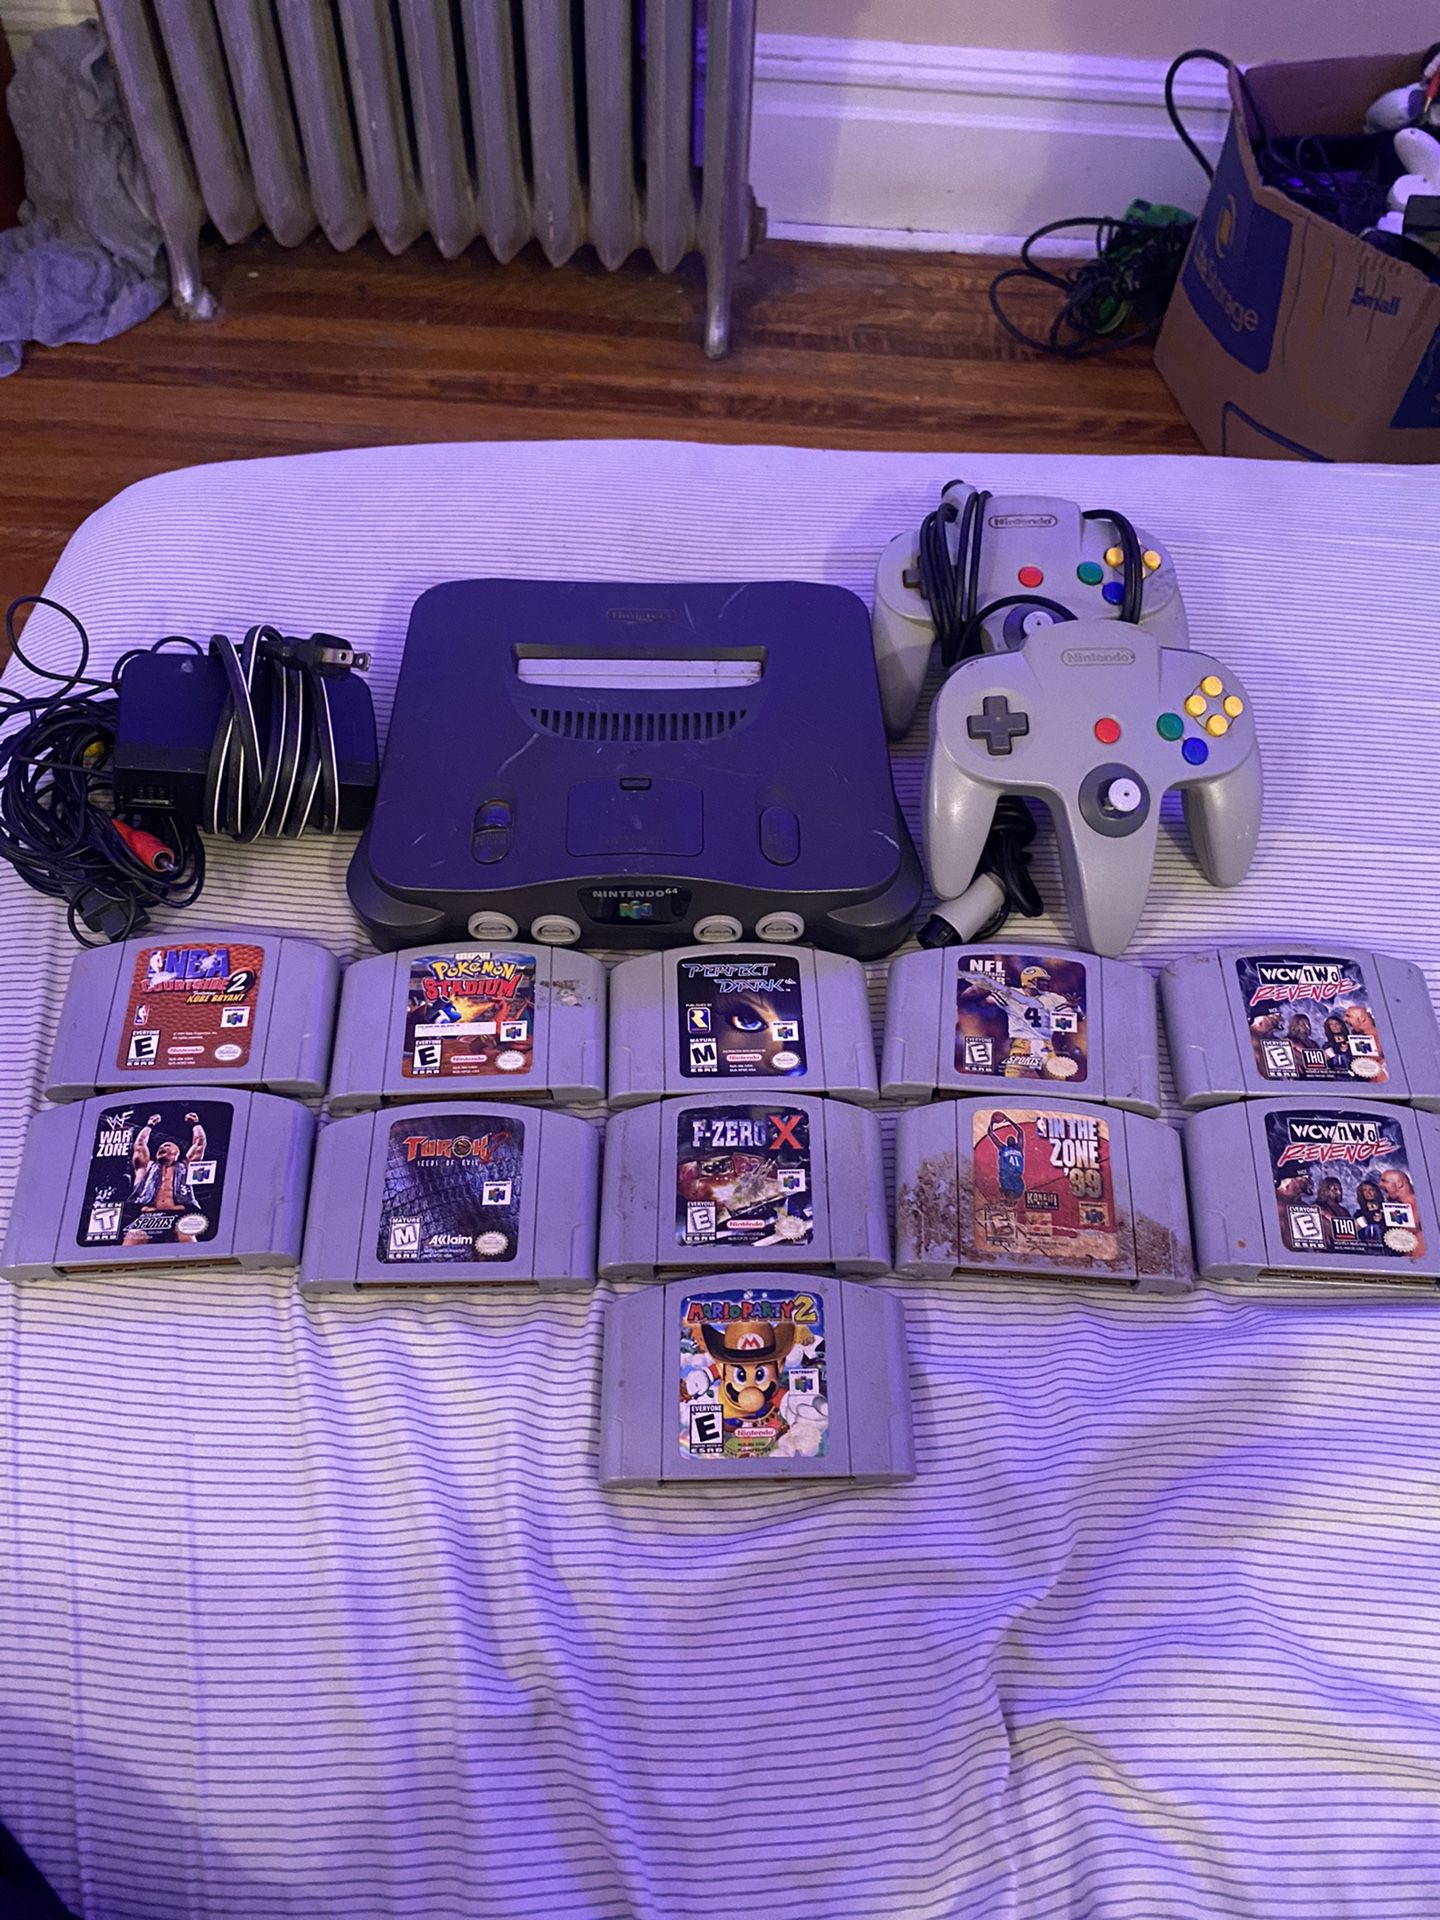 Nintendo 64 2 controllers, 11 games